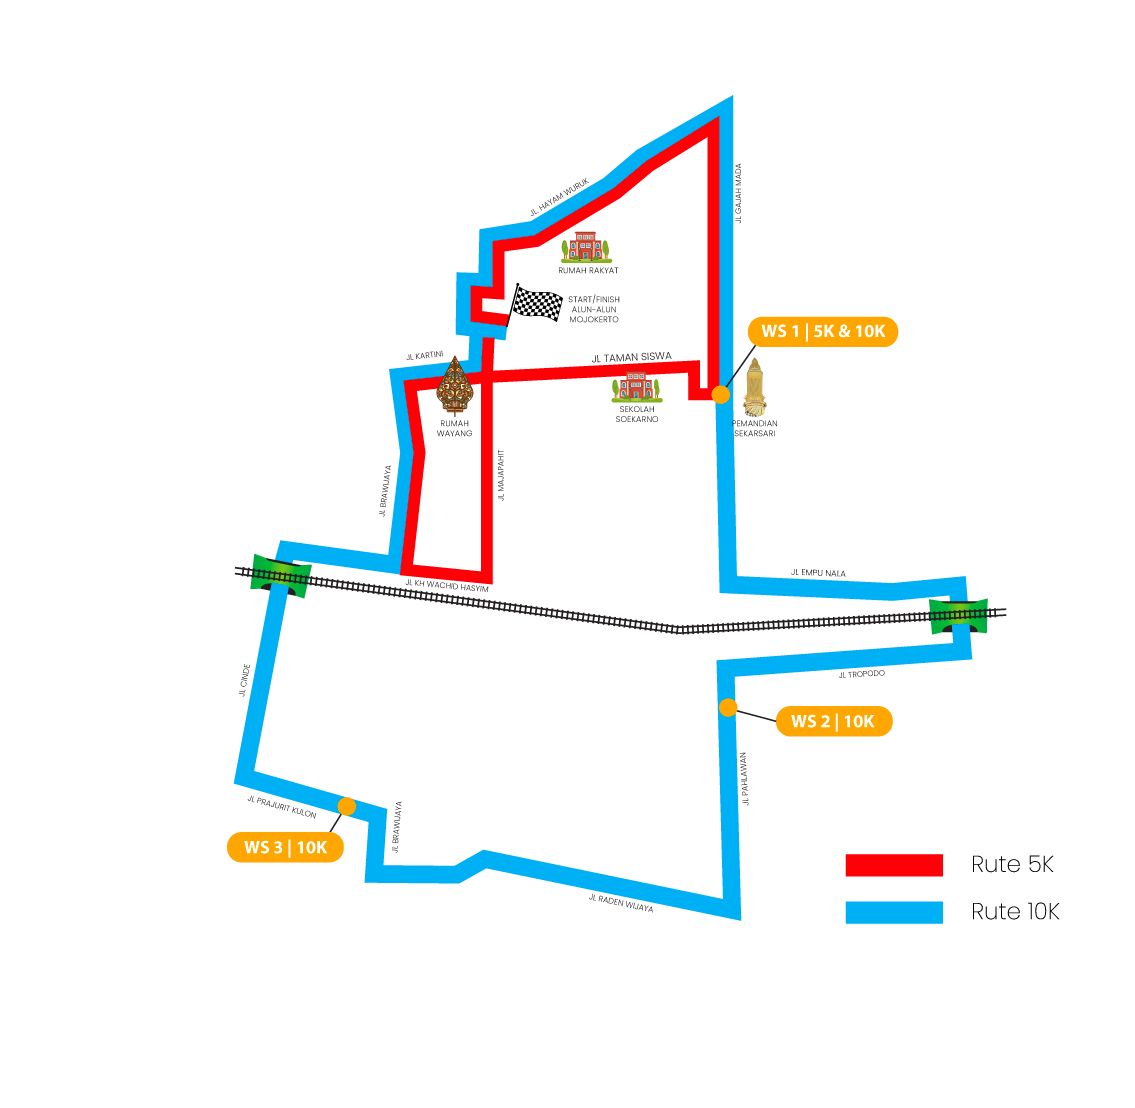 Race Map